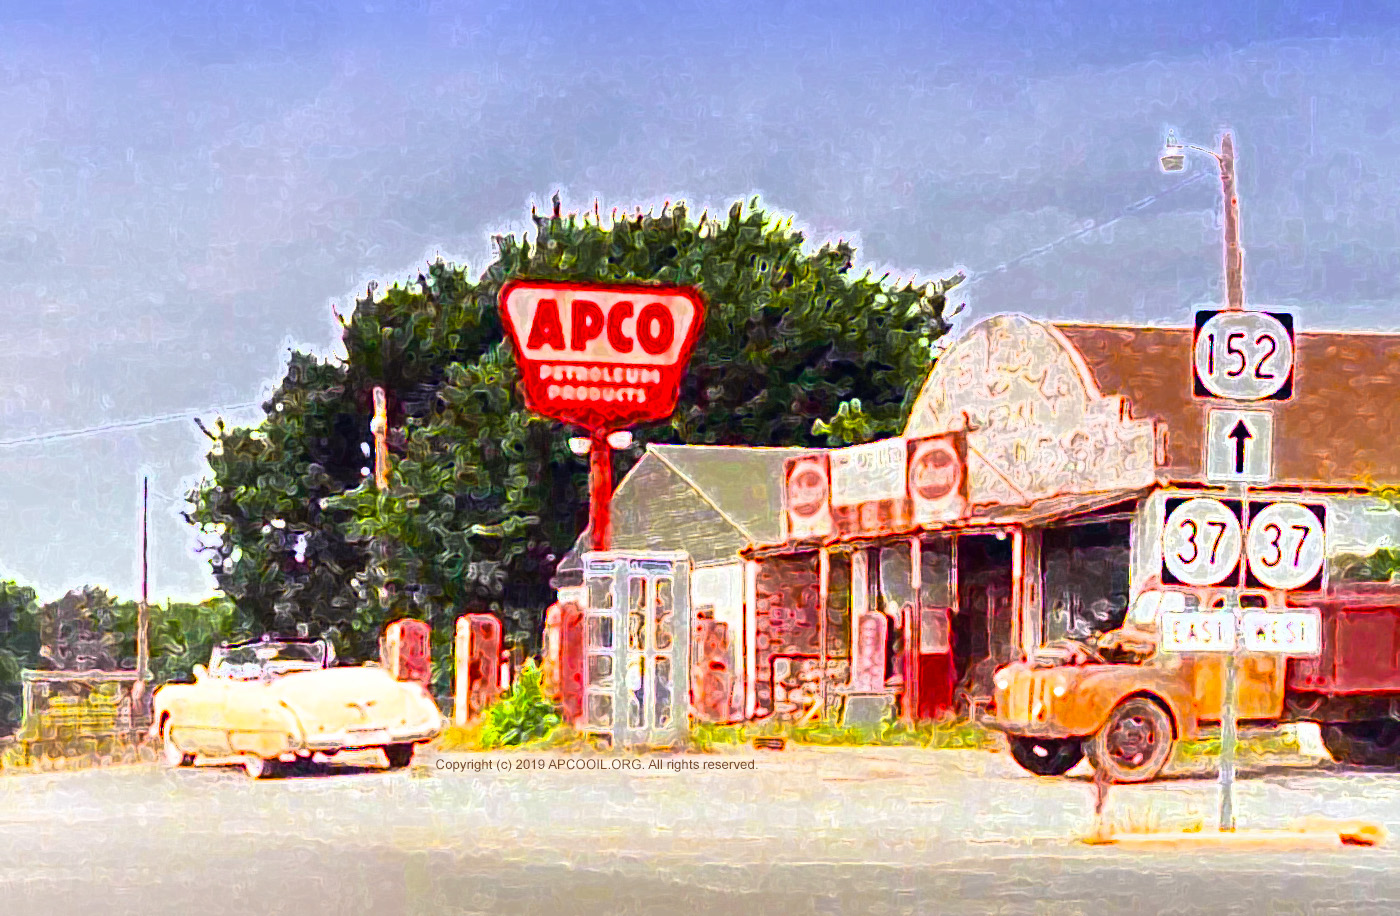 APCO Gas Station in Rain Man, Oklahoma